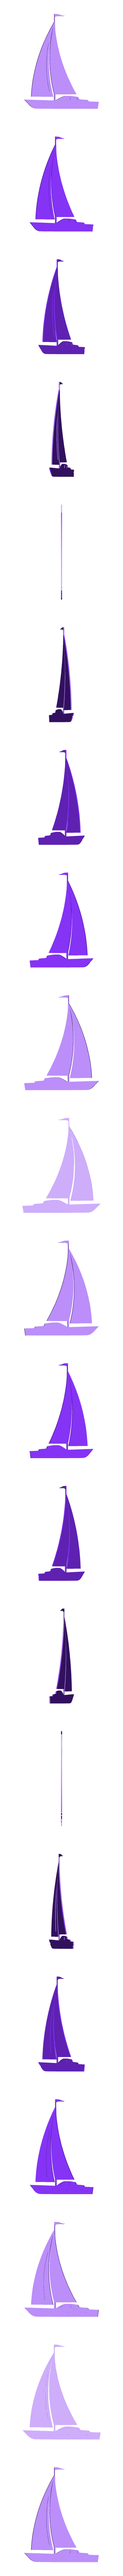 Sail_Boat.stl Download free STL file Sail Boat • Model to 3D print, JonathanK1906